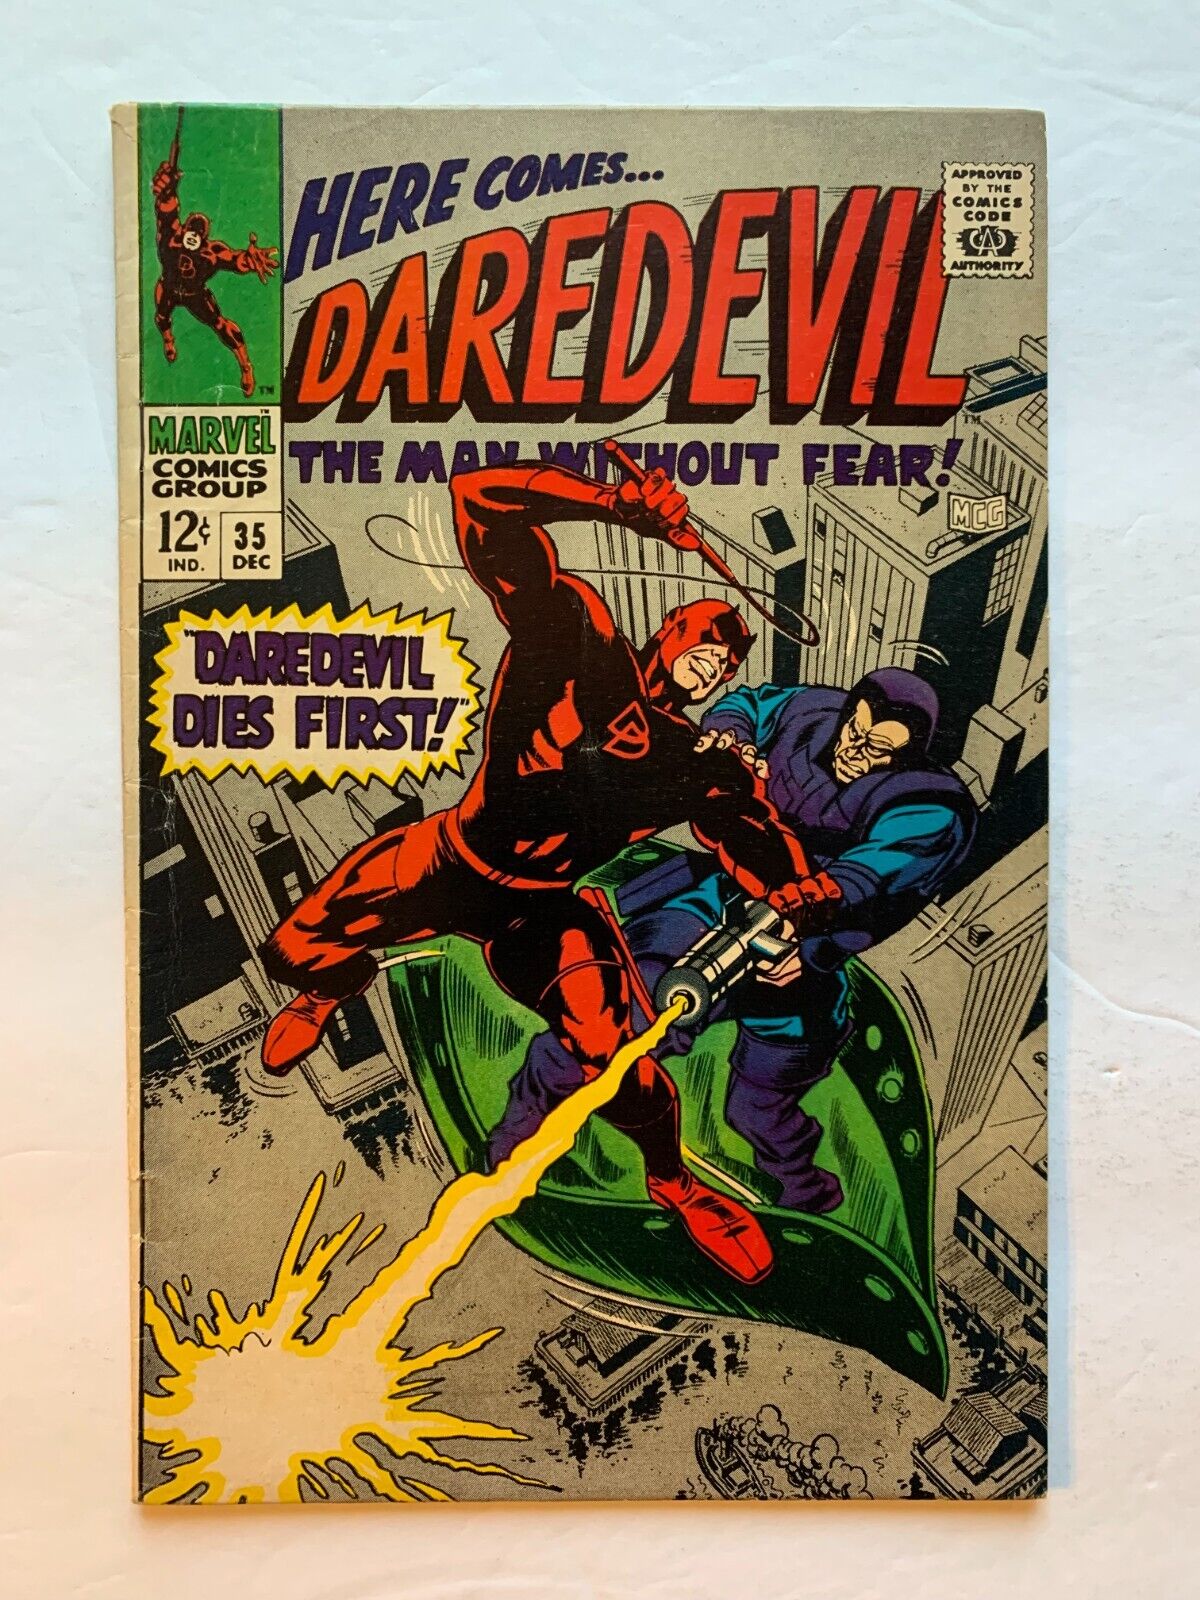 Daredevil #35 - Dec 1967 - Vol.1 - Marvel - Silver Age - 6.0 FN